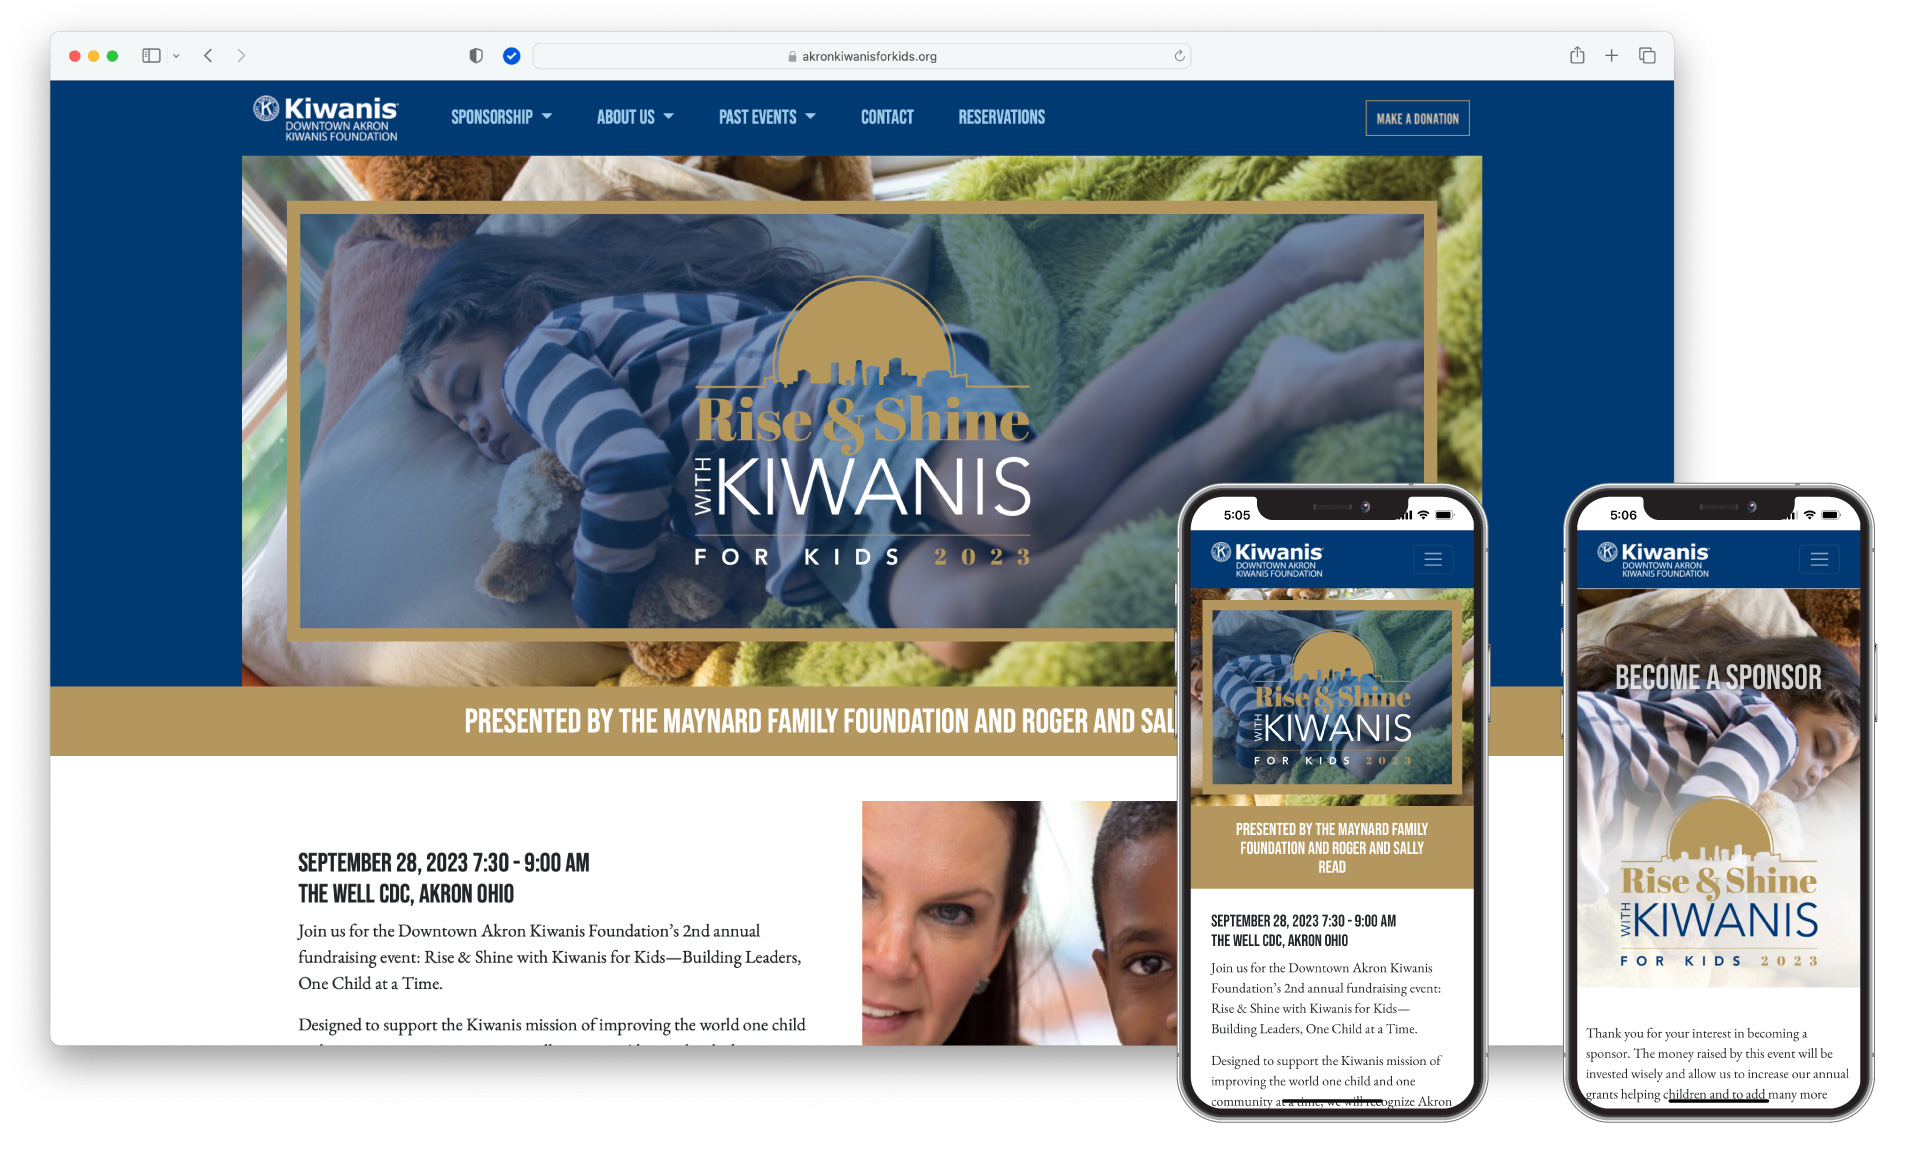 Rise & Shine with Kiwanis for Kids Program Website